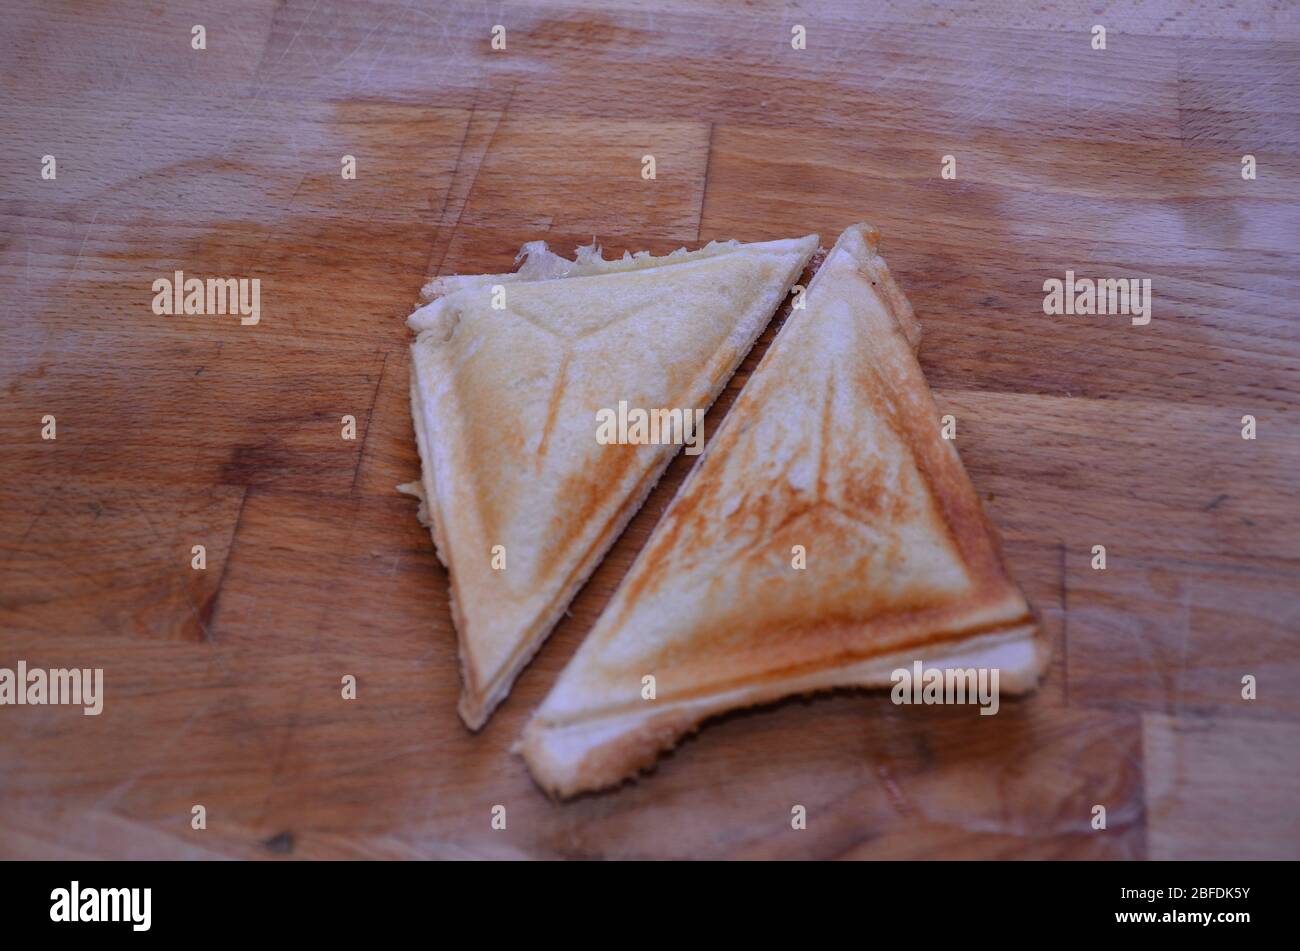 Hot, Hearty Sandwich Stock Photo